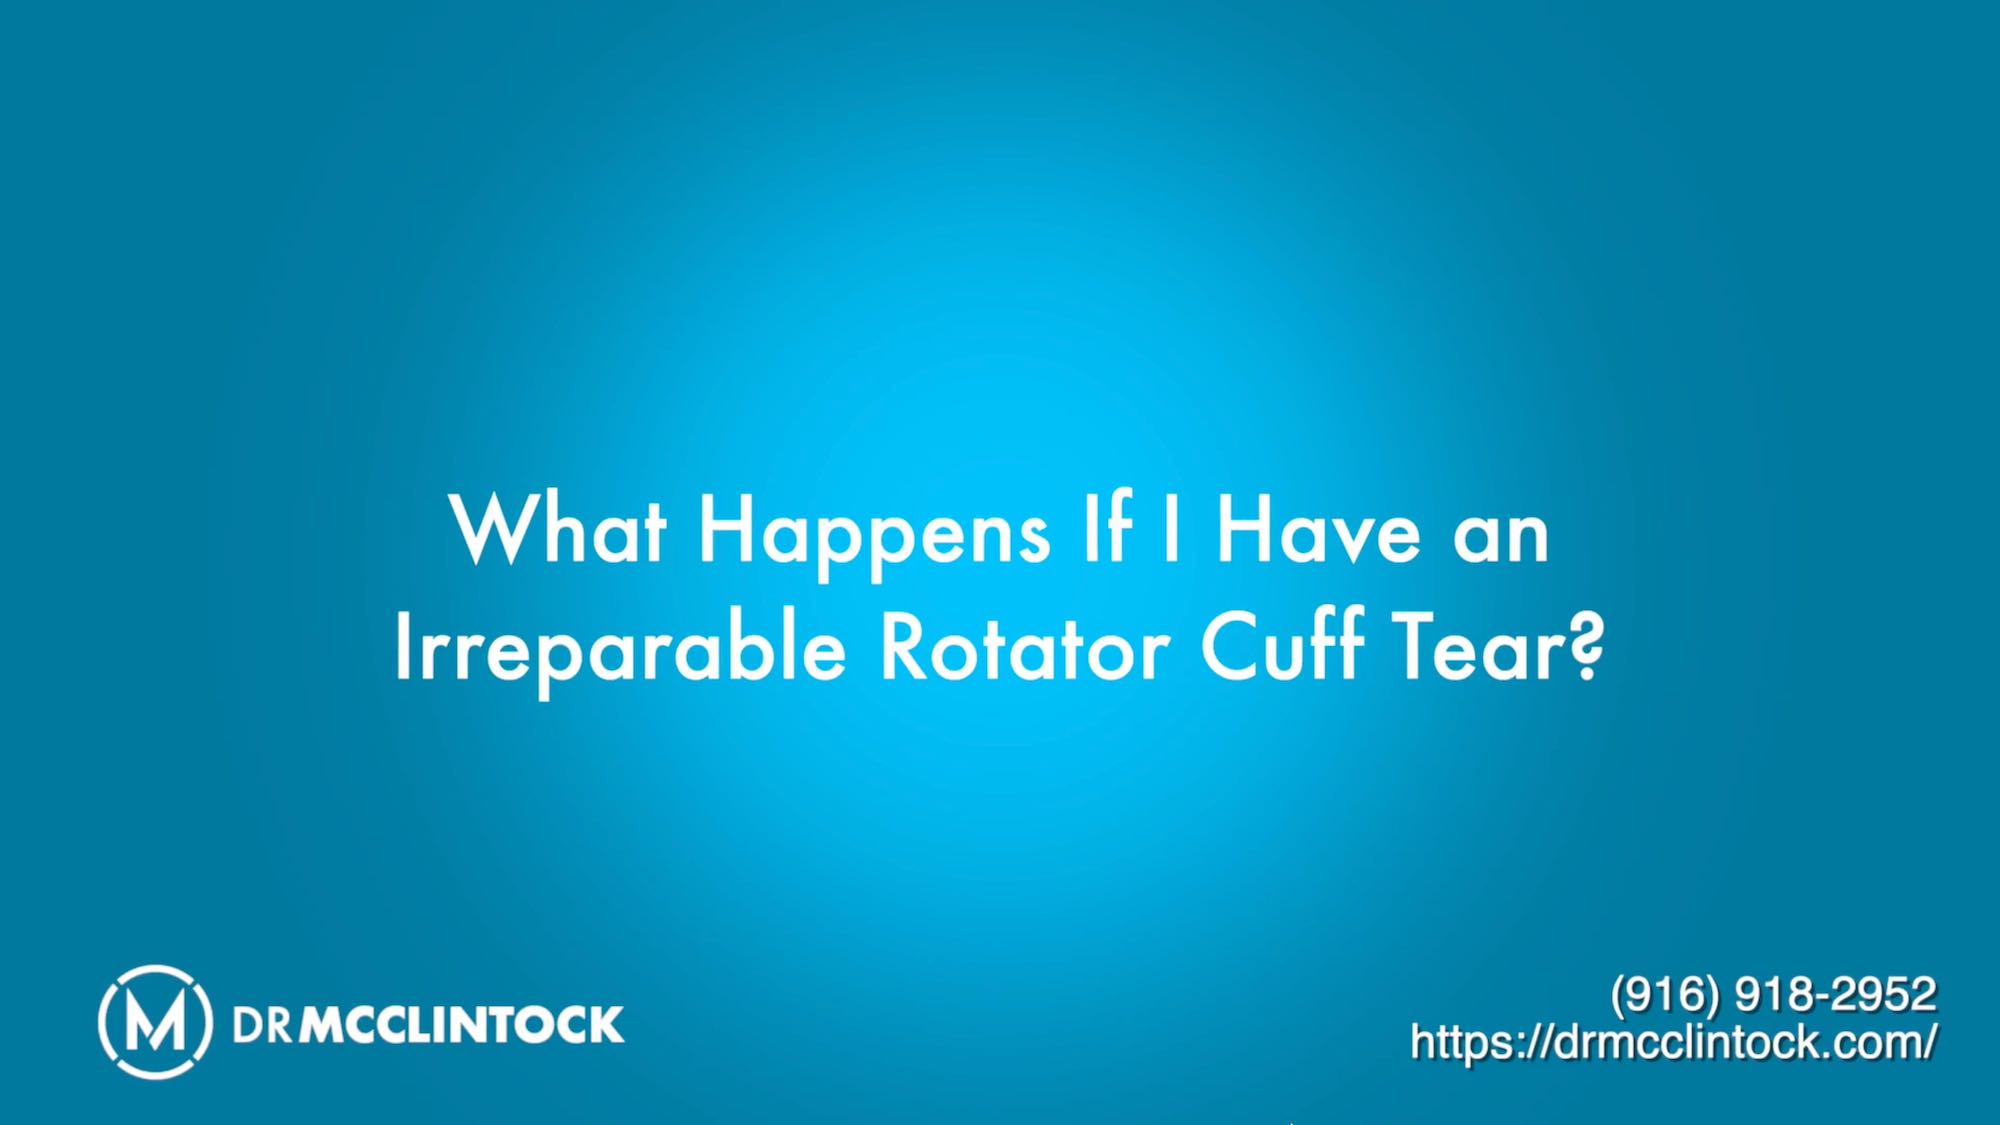 Irreparable Rotator Cuff Tear video